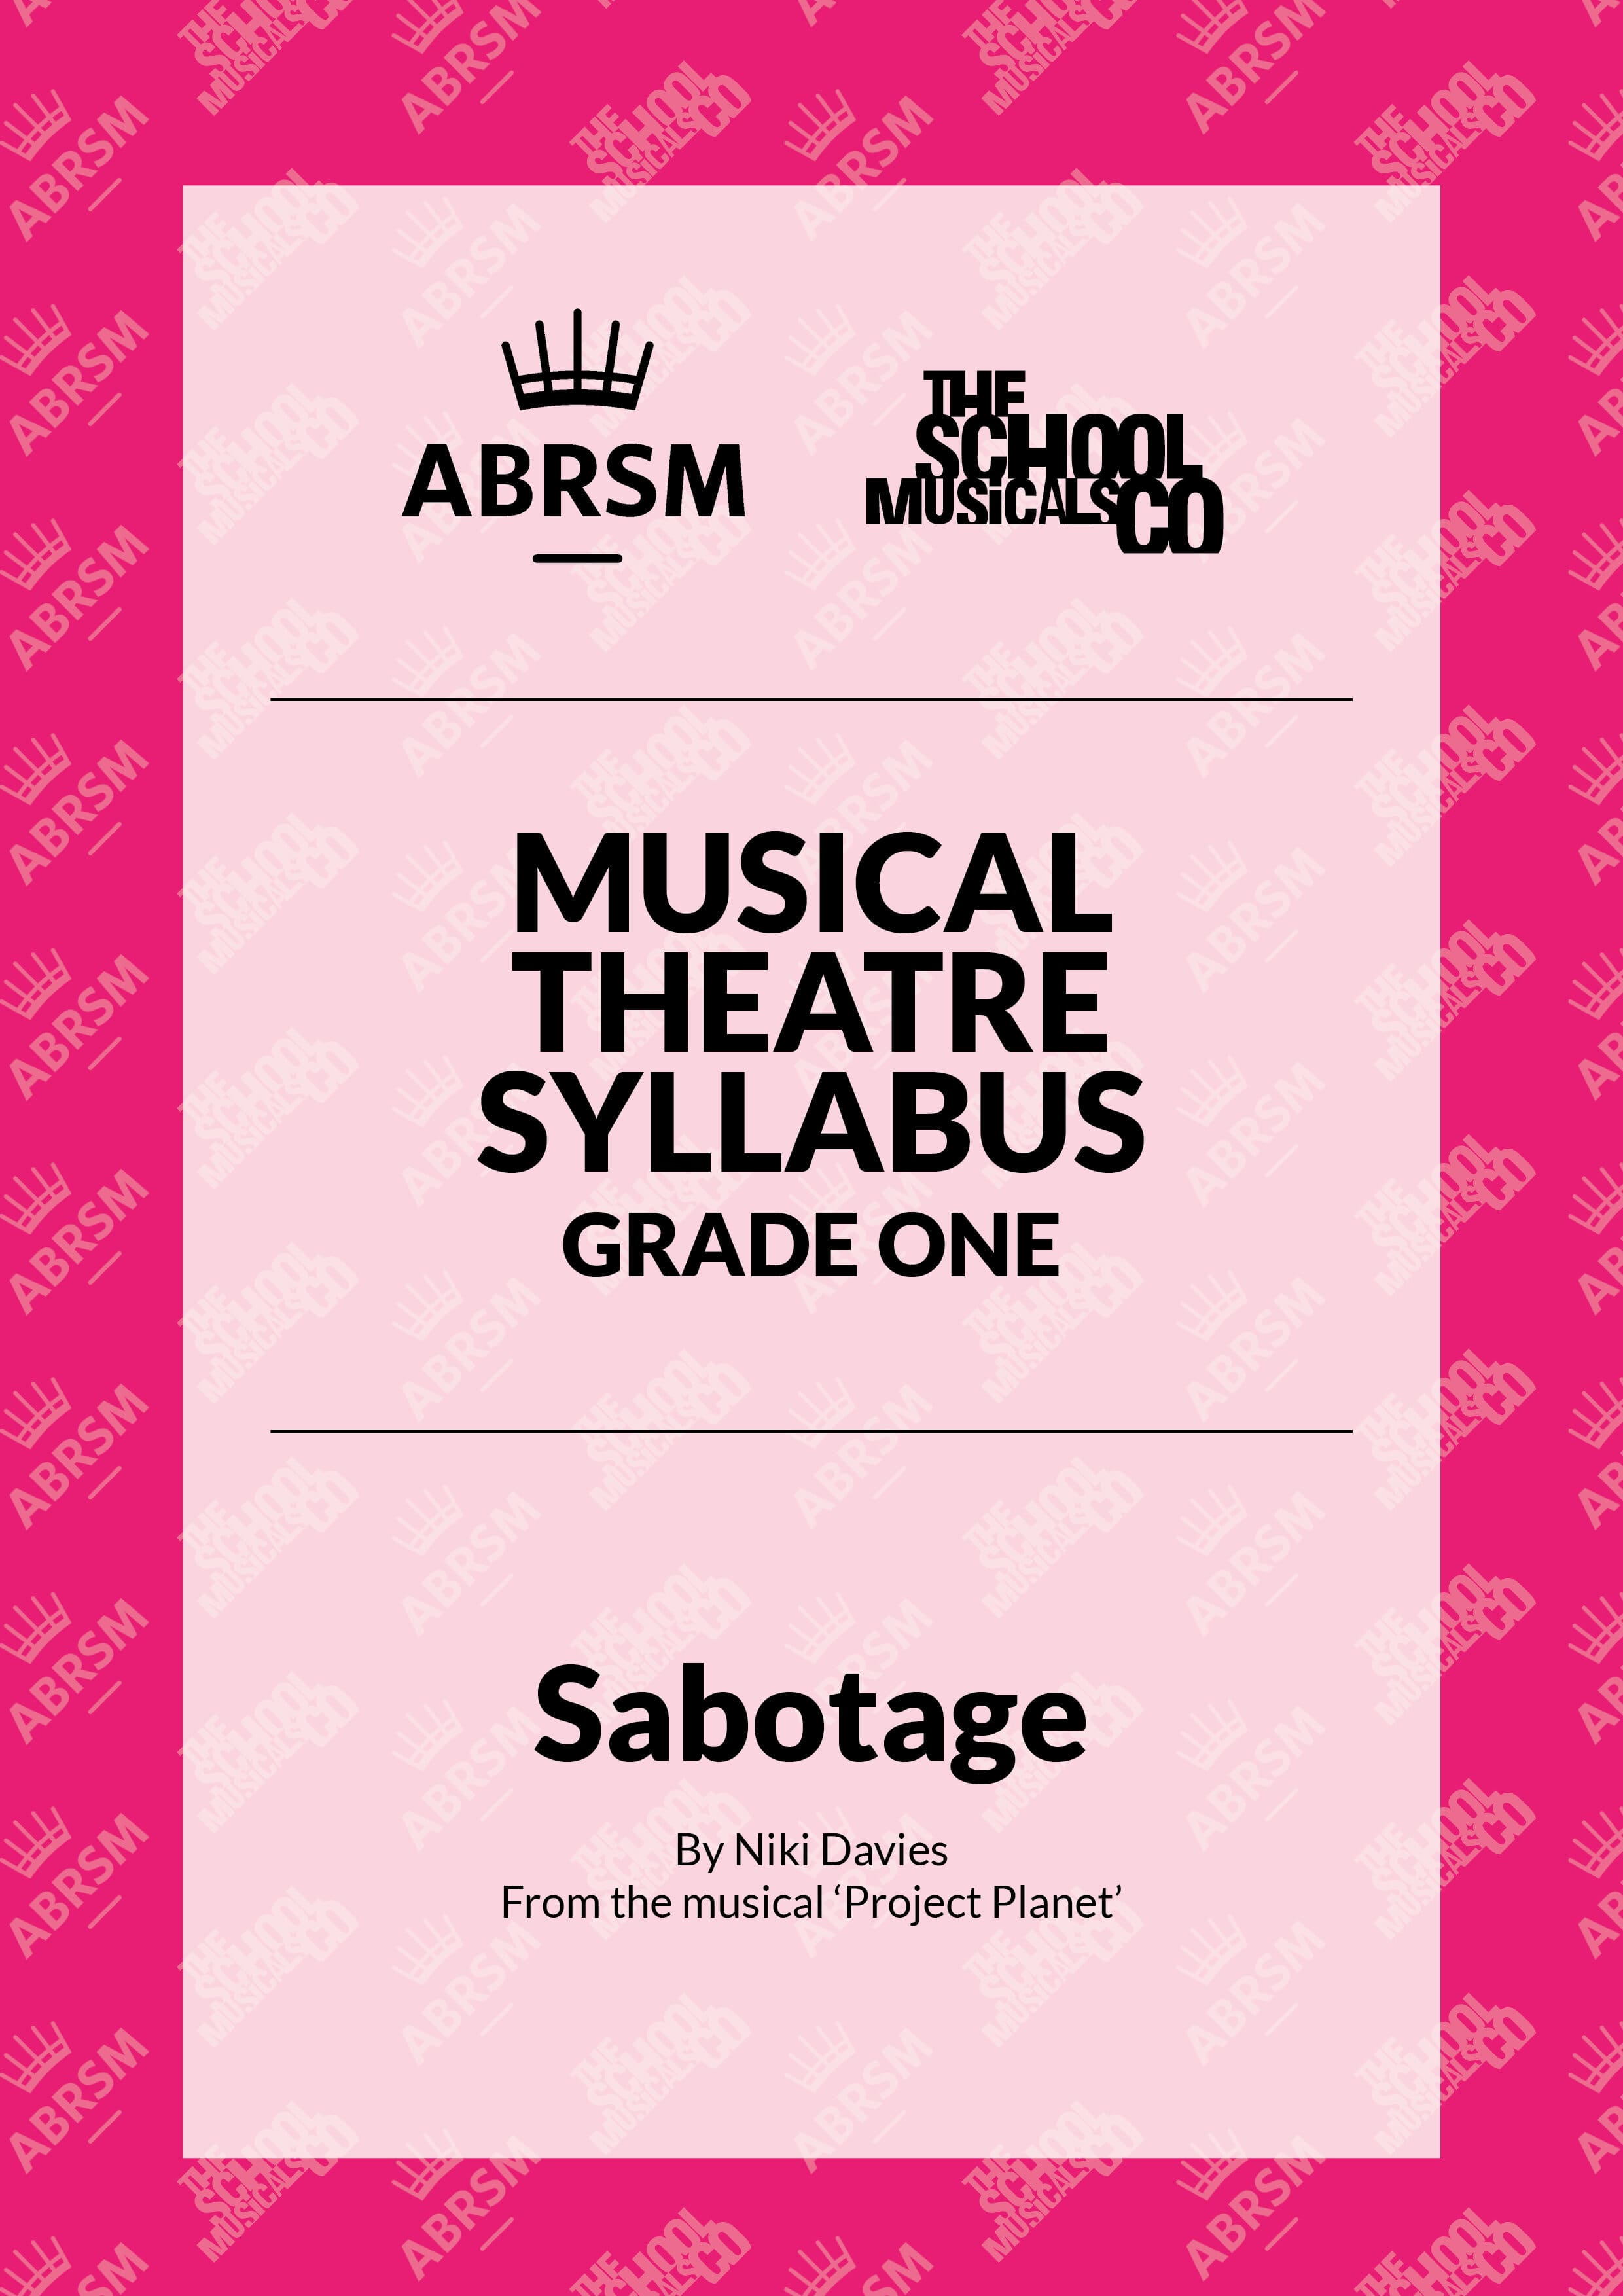 Sabotage - ABRSM Musical Theatre Syllabus Grade One